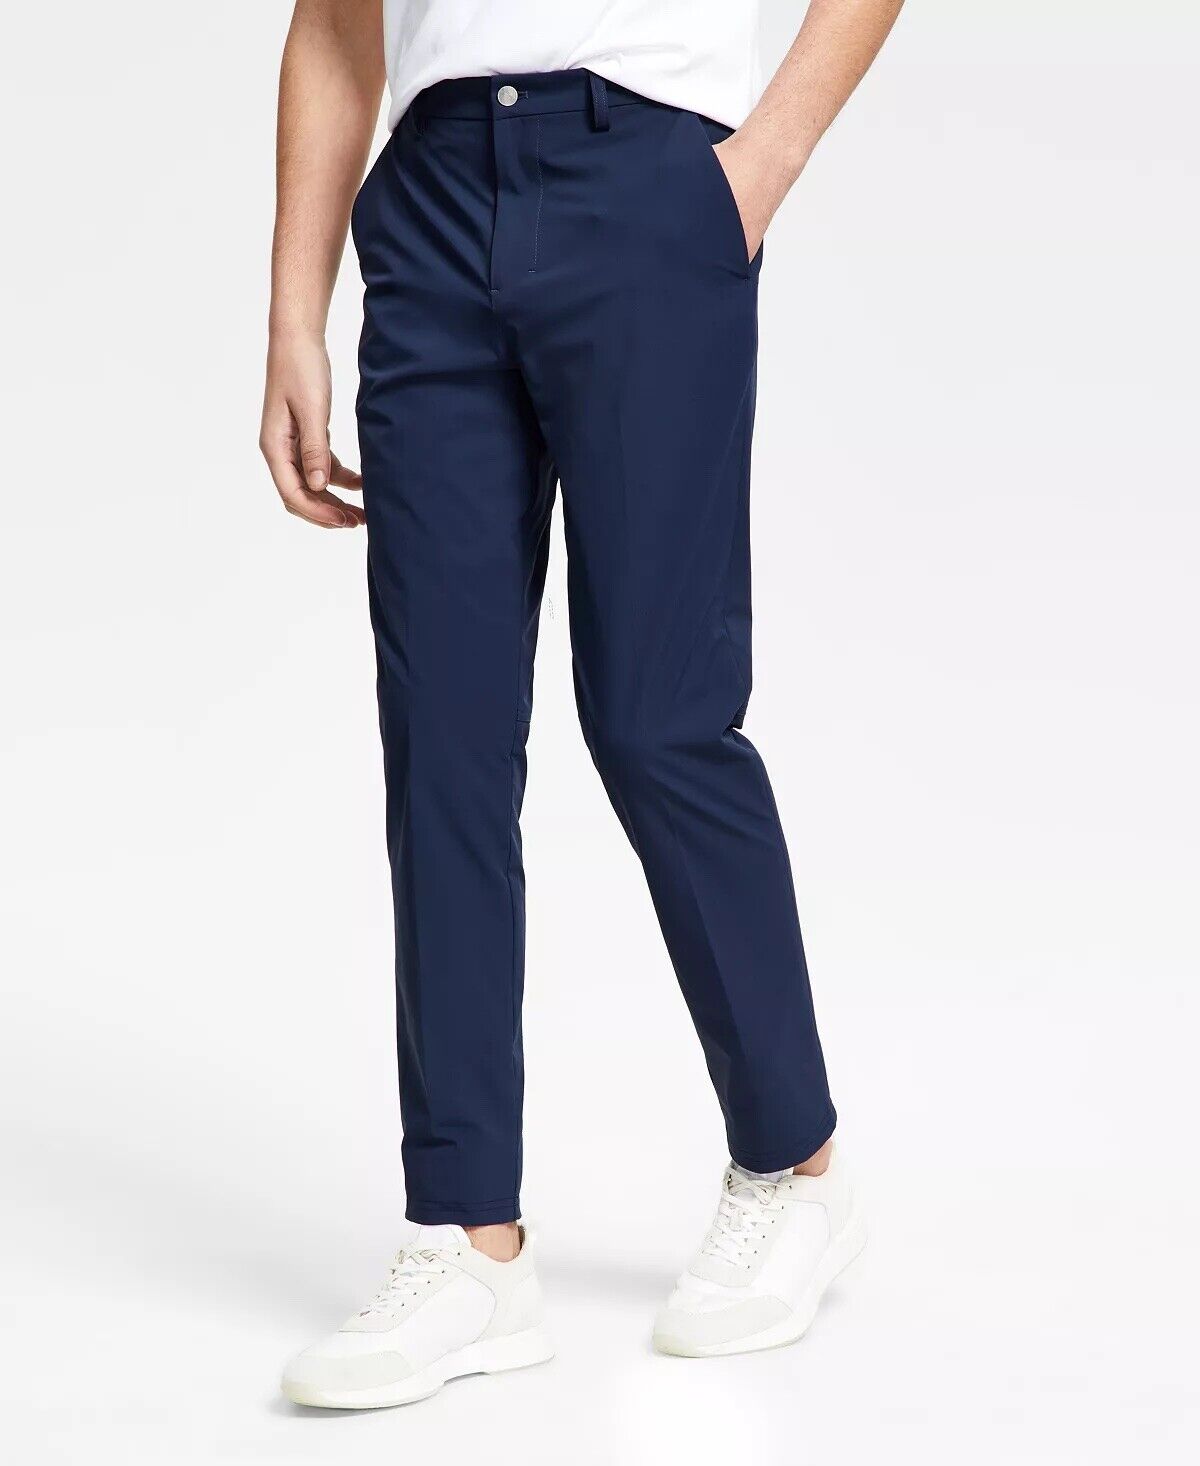 Calvin Klein Men's Dress Pants 40 x 34 Navy Blue Slim Fit Tech Solid Performance